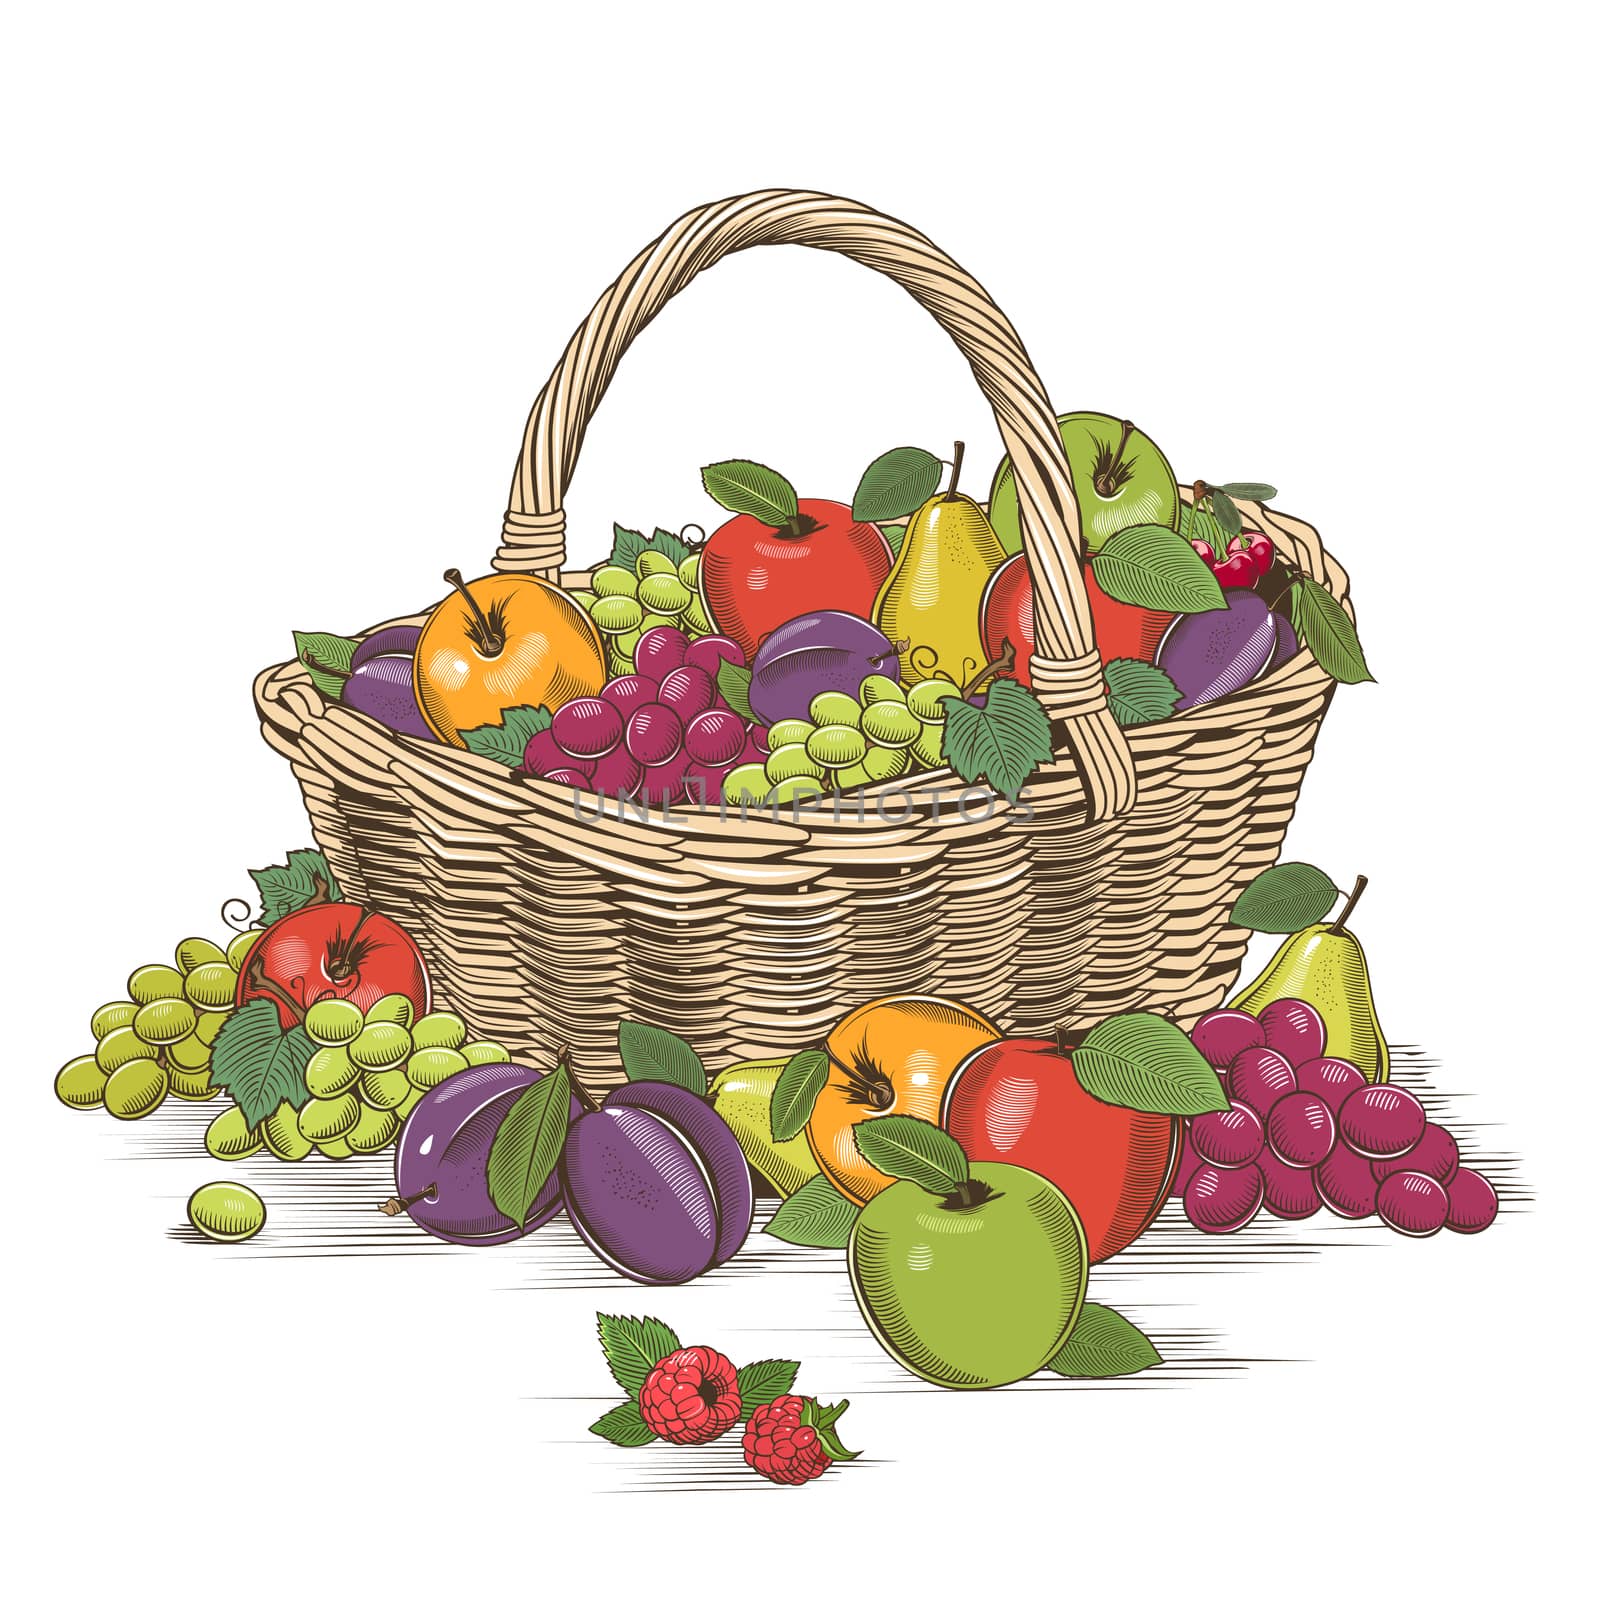 Fruit basket on white background in woodcut style.